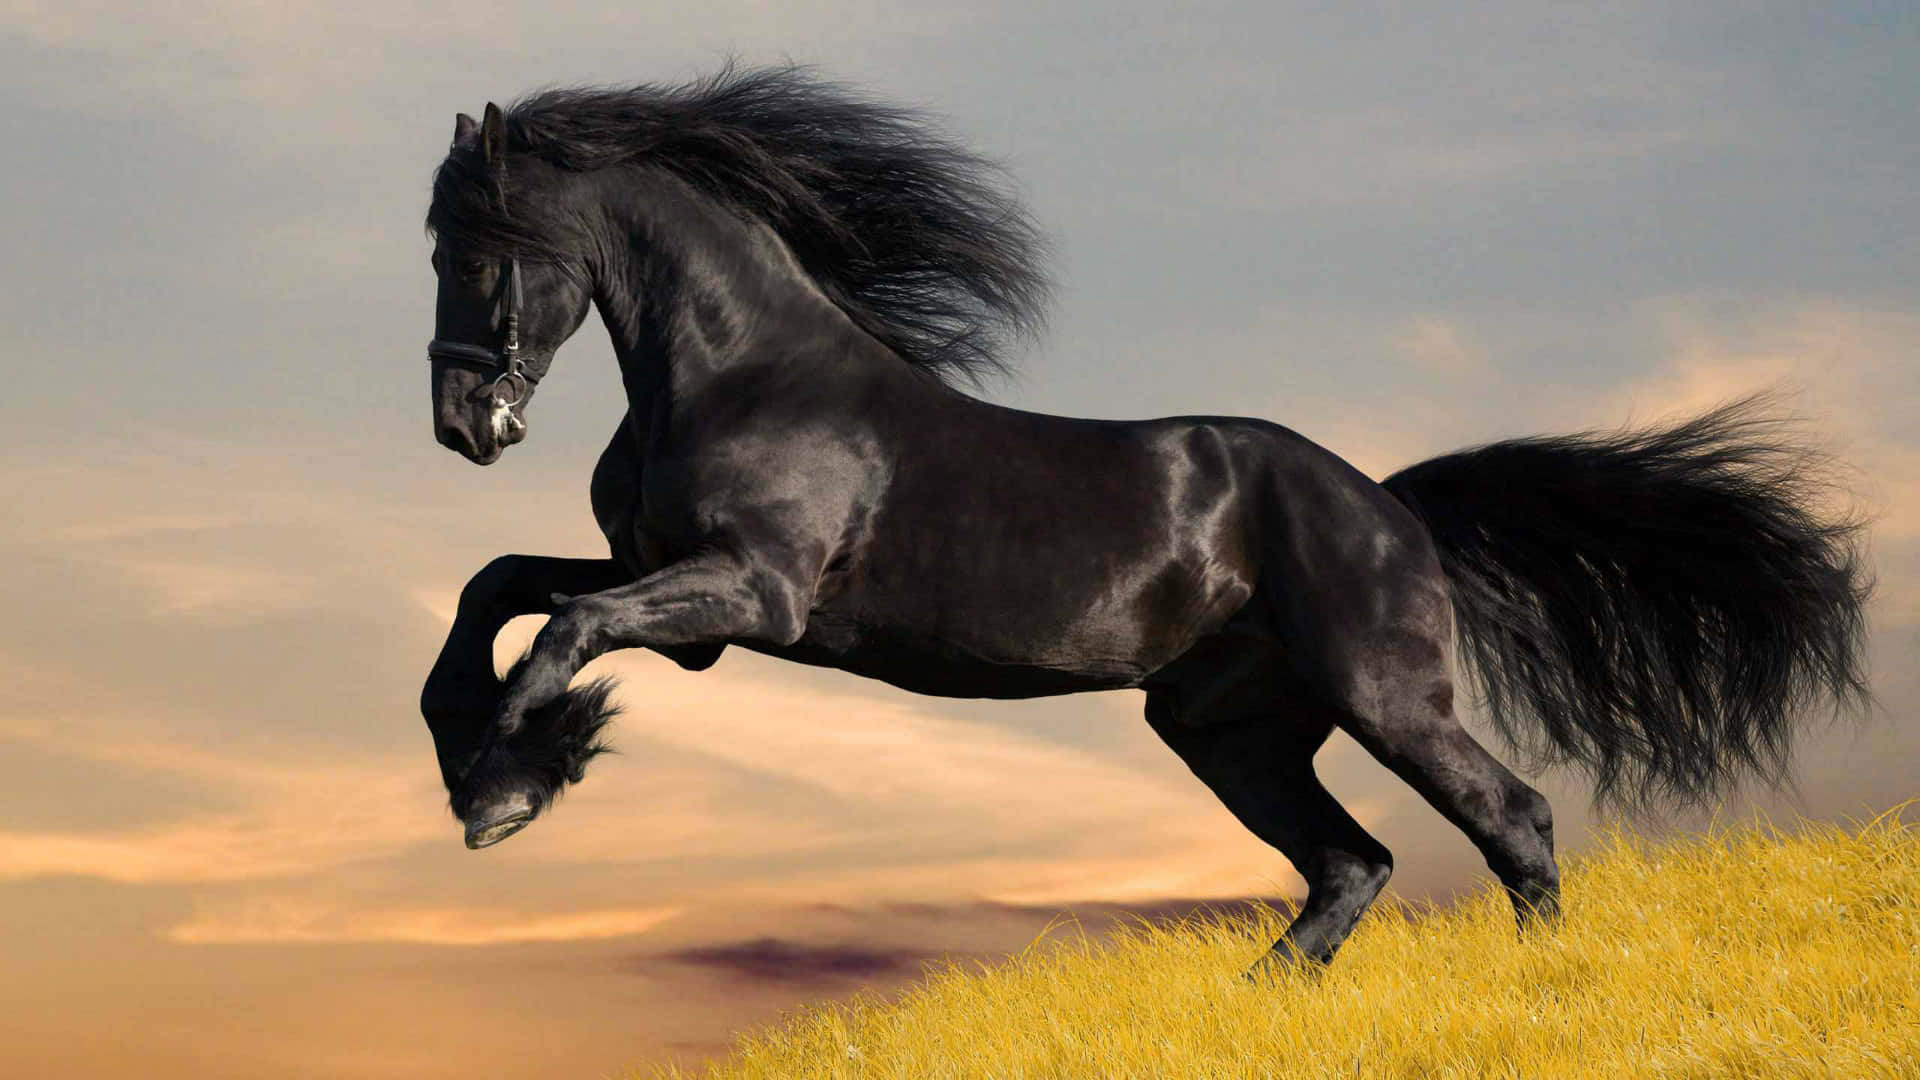 A Black Horse Running